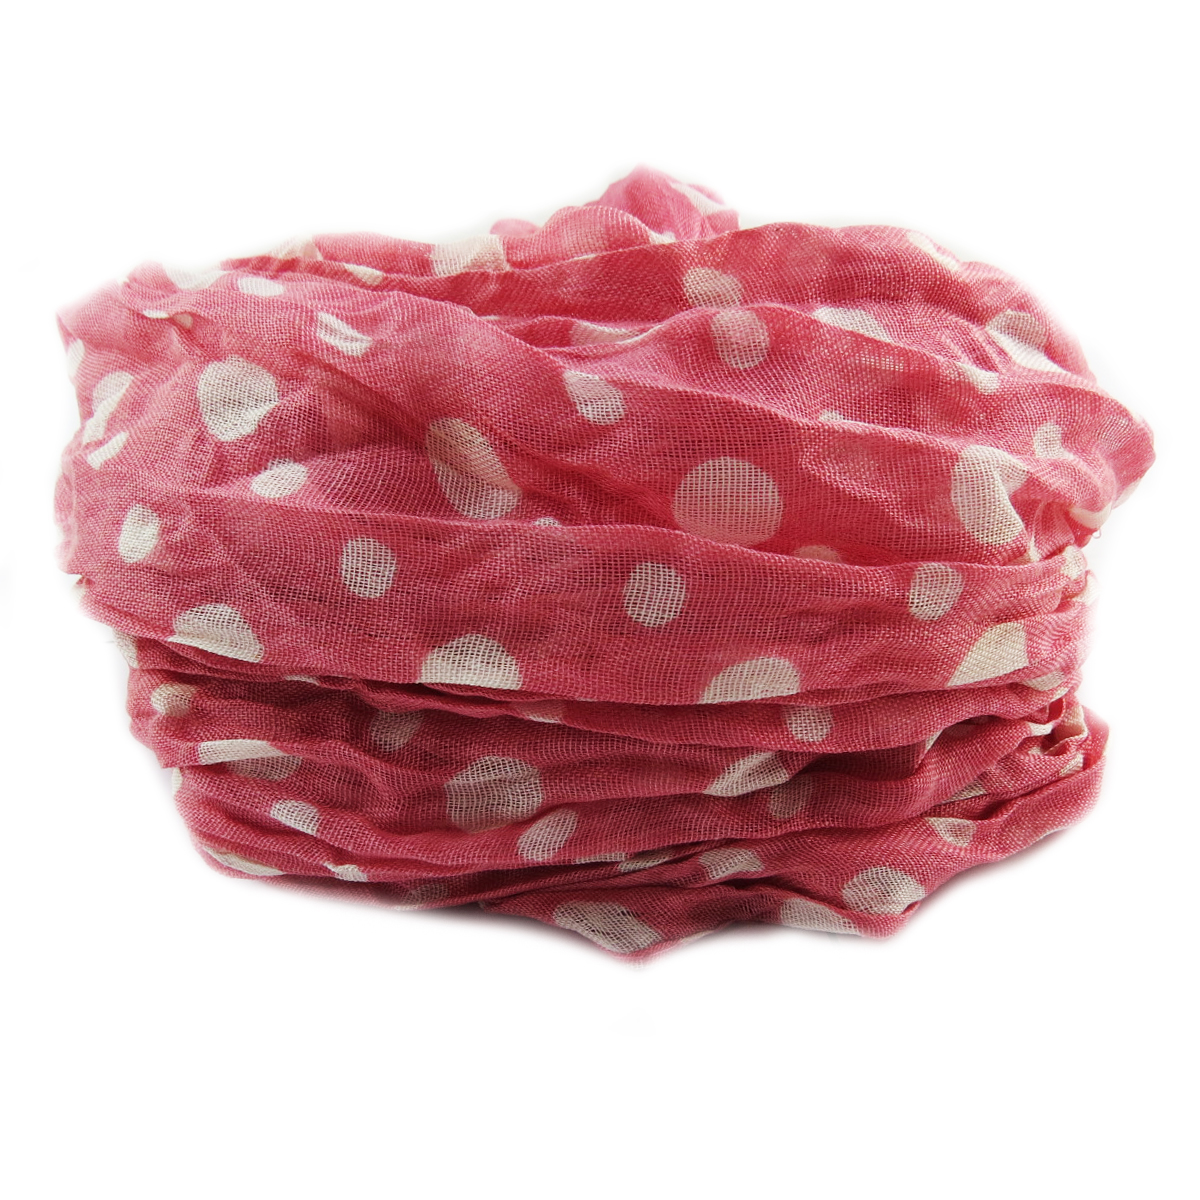 Echarpe coton \'Petits Pois\' rose - 50x160 cm - [Q5278]